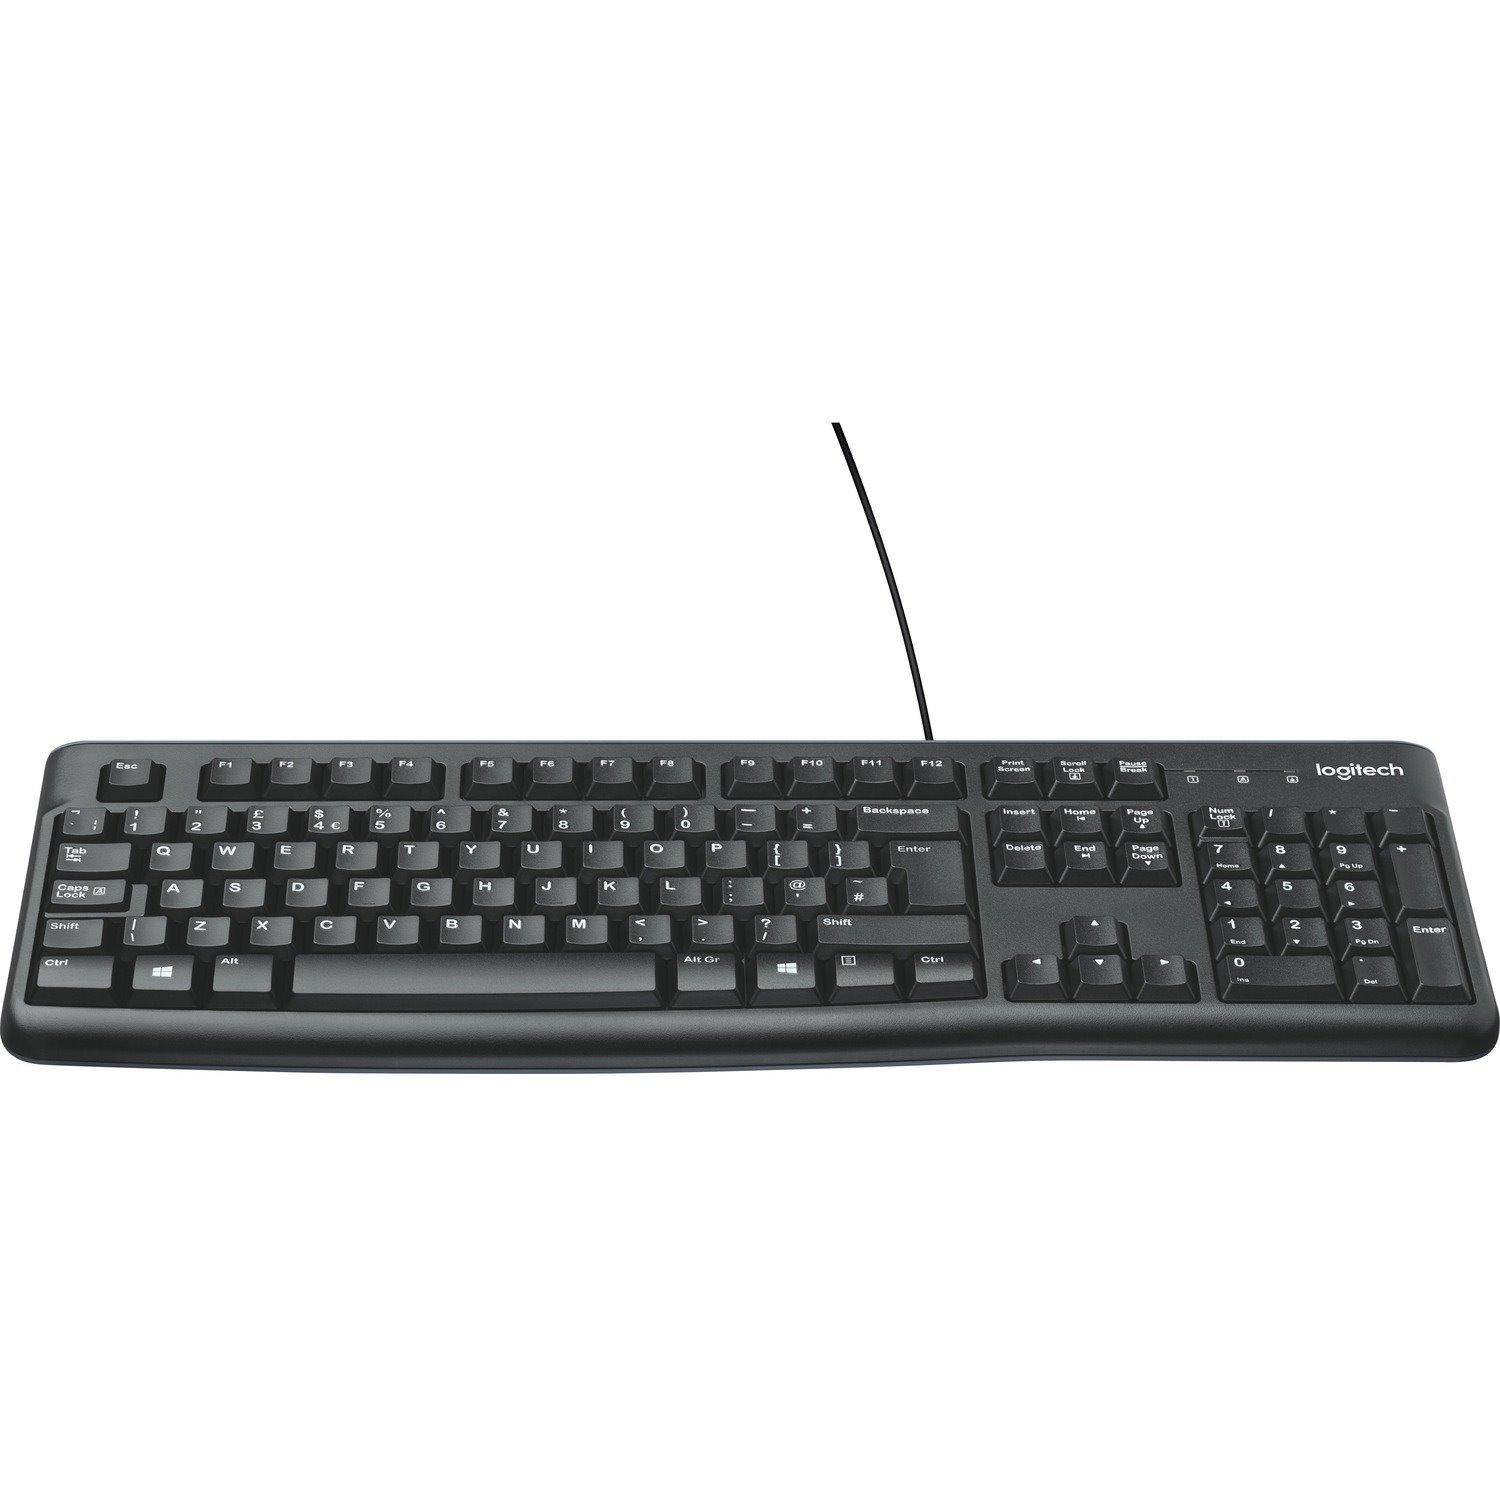 Logitech K120 Keyboard - Cable Connectivity - USB Interface - Slovak - QWERTZ Layout - Black